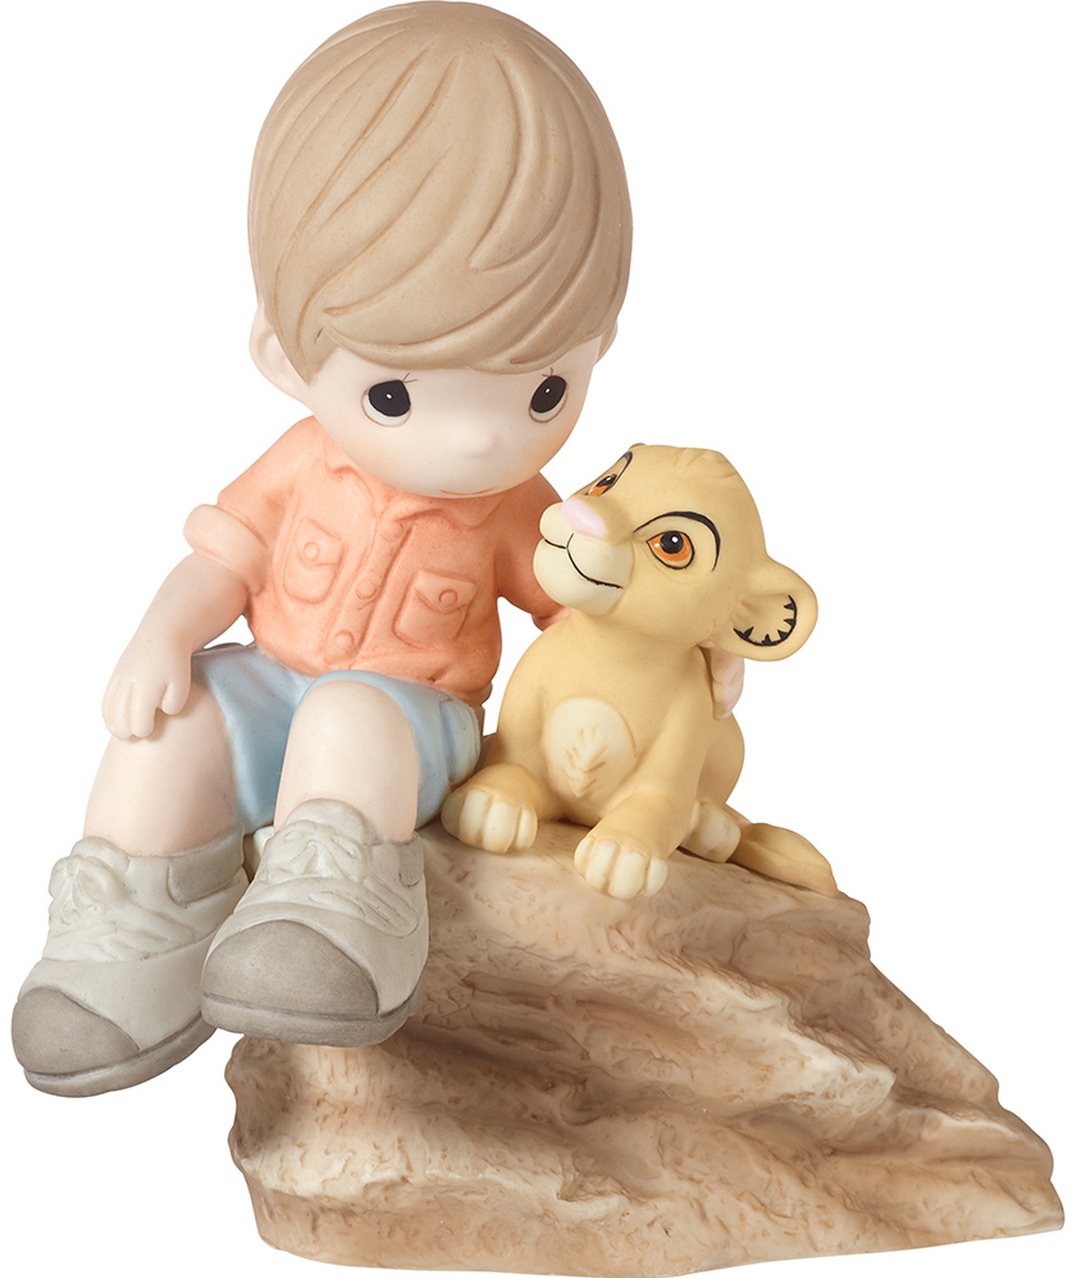 Precious Moments 101051i Disney Boy Sitting with Simba Figurine